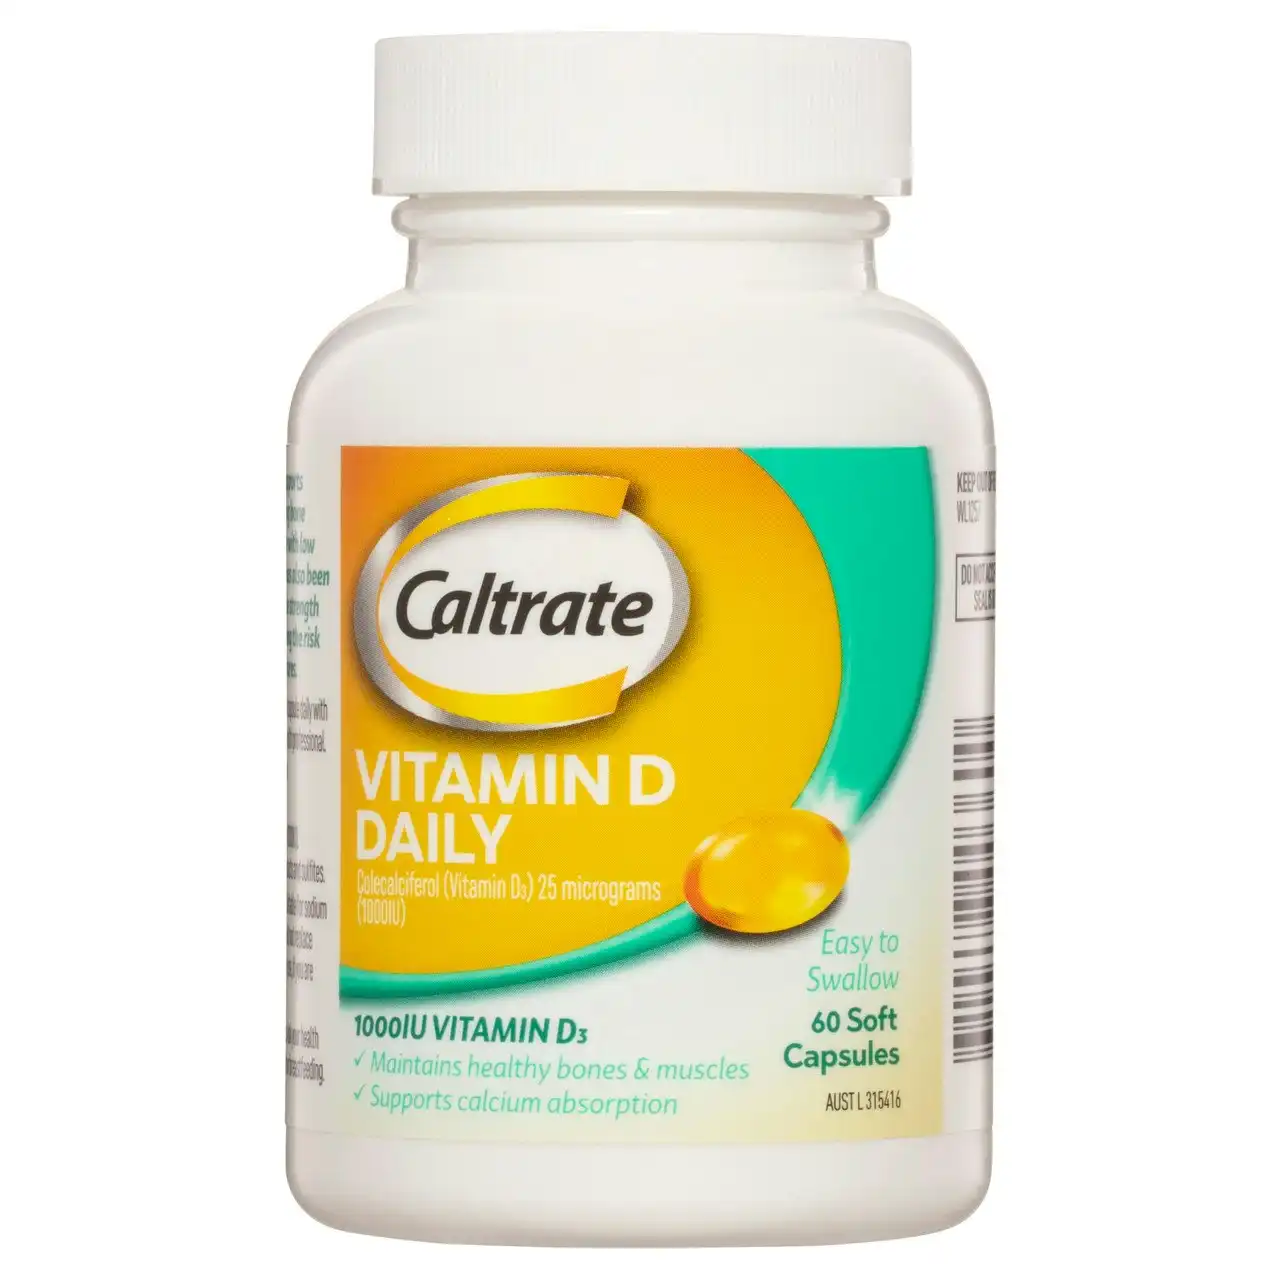 Caltrate Vitamin D Daily 60 Soft Capsules